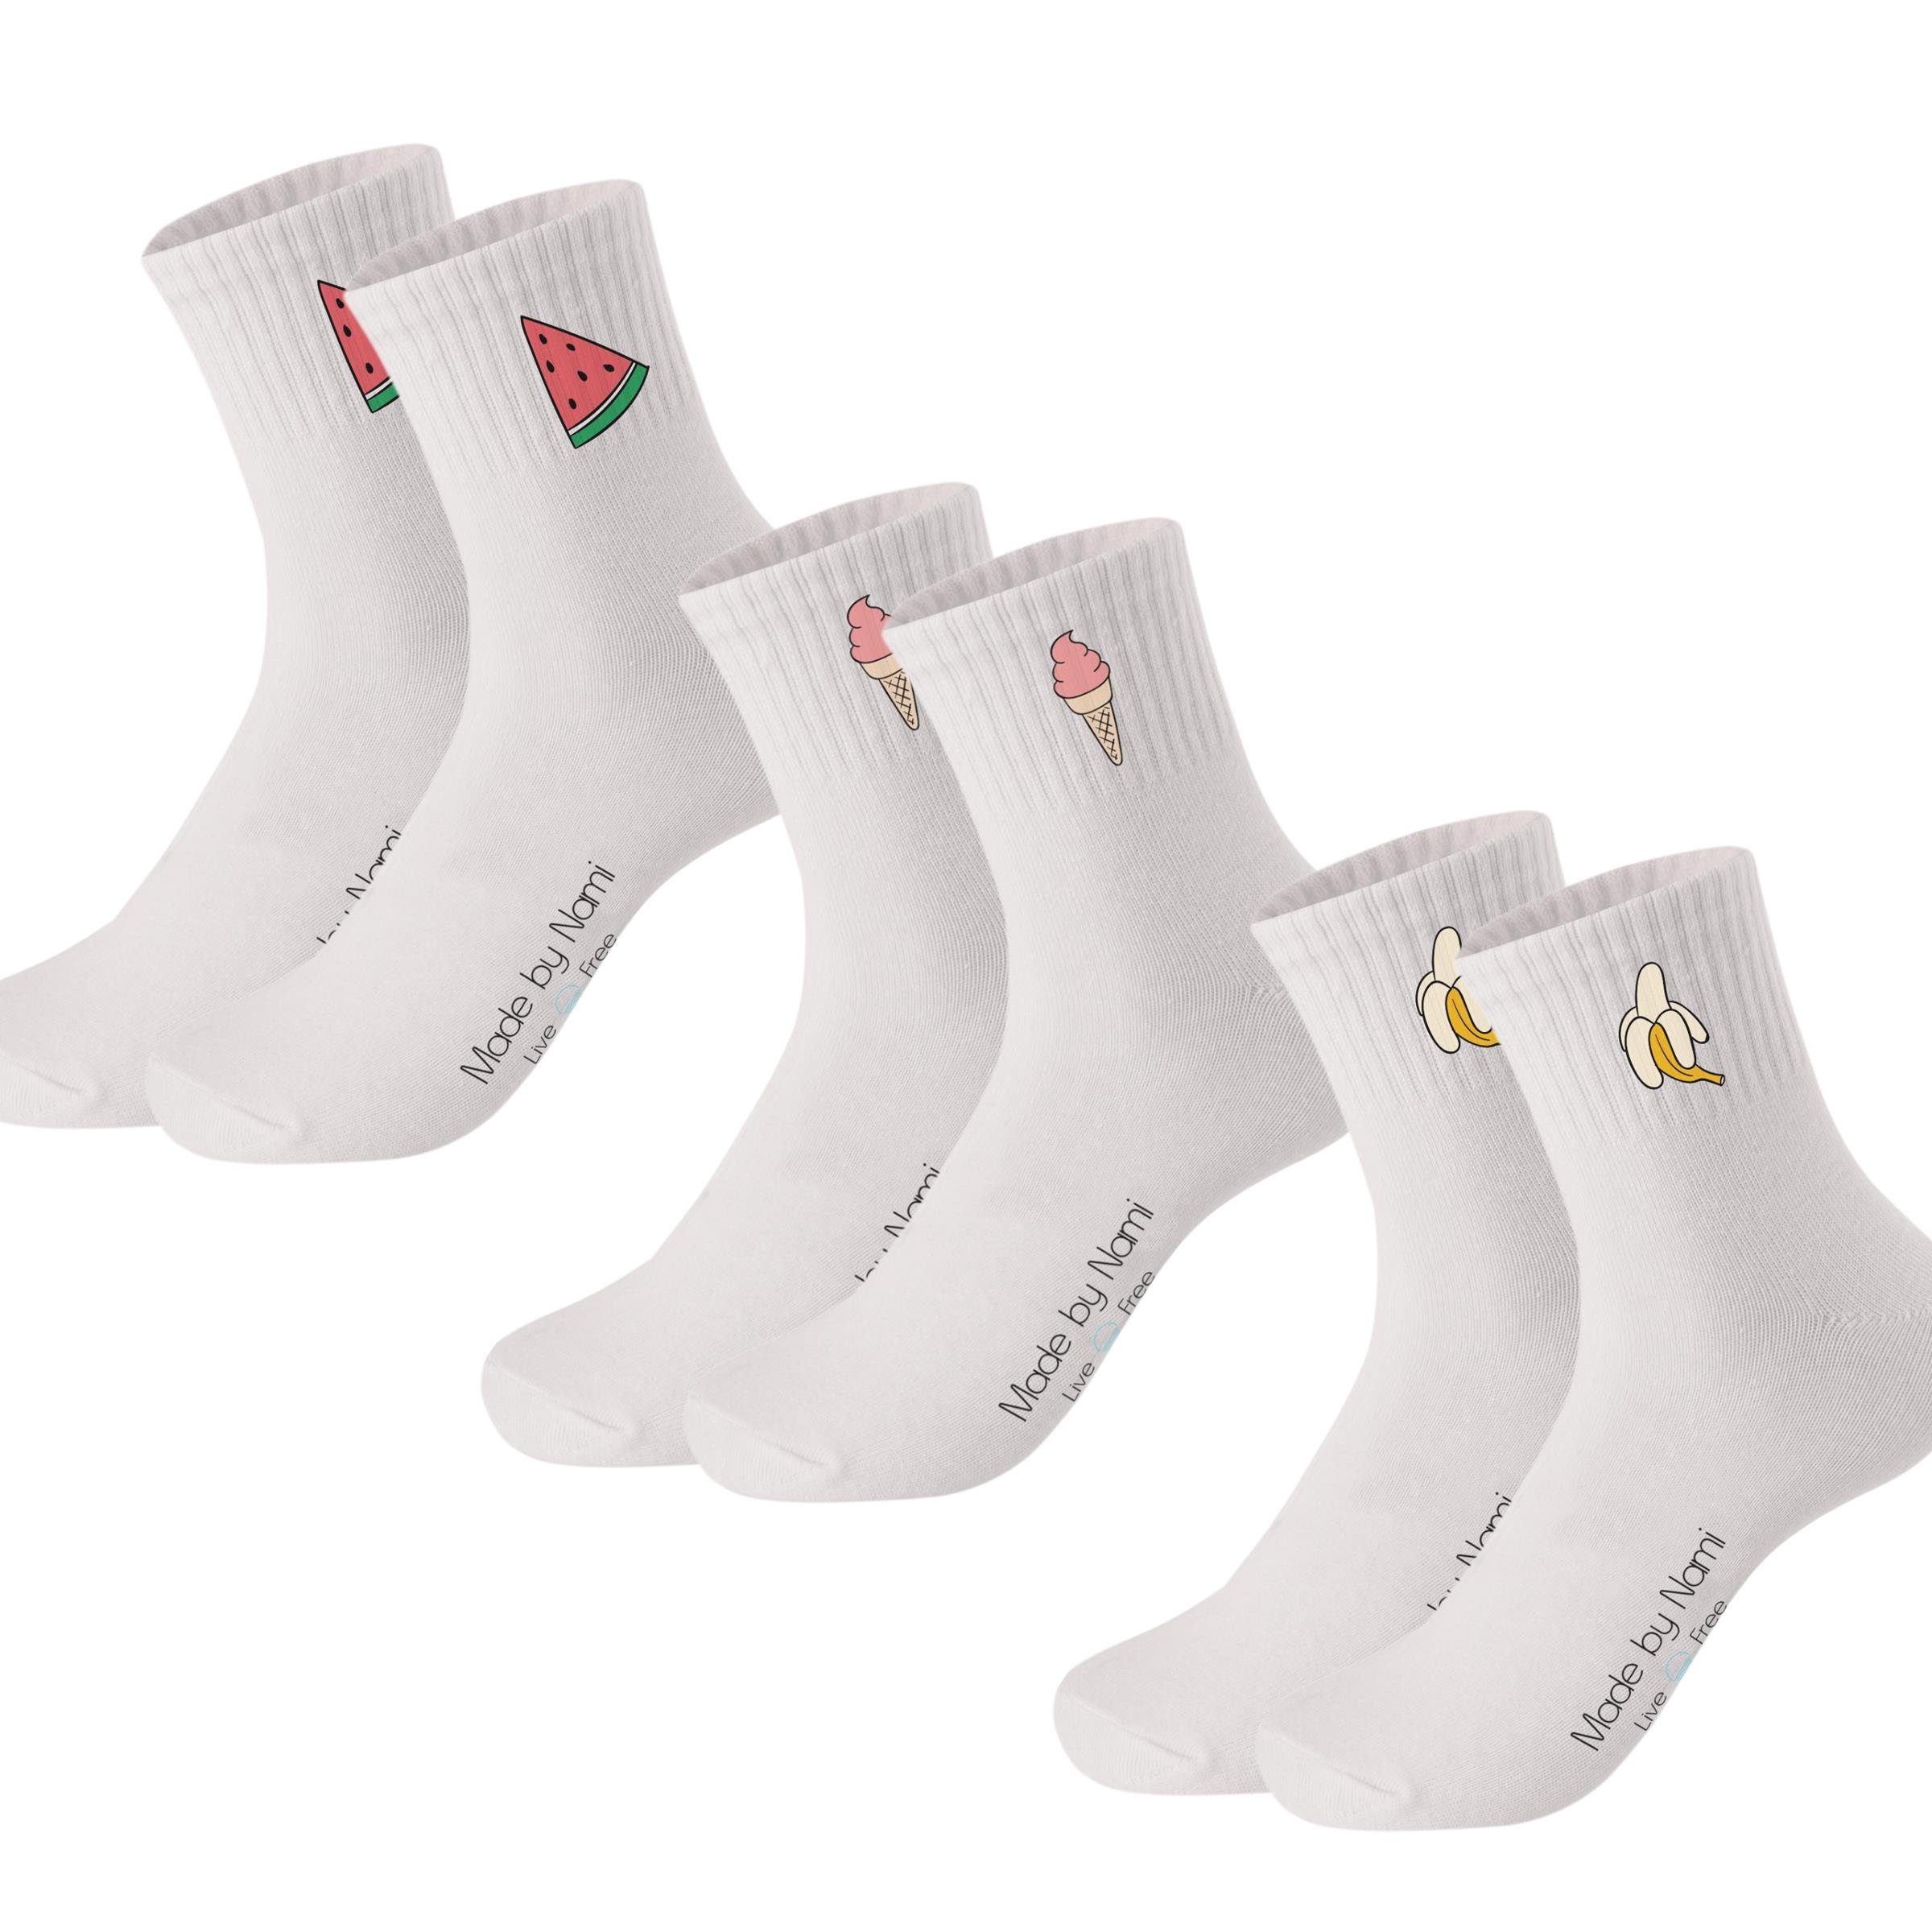 Made by Nami Socken Crew Socks Tennissocken weiß - Print - Baumwolle (3-Paar) 35-40, atmungsaktiv | Kompressionsstrümpfe